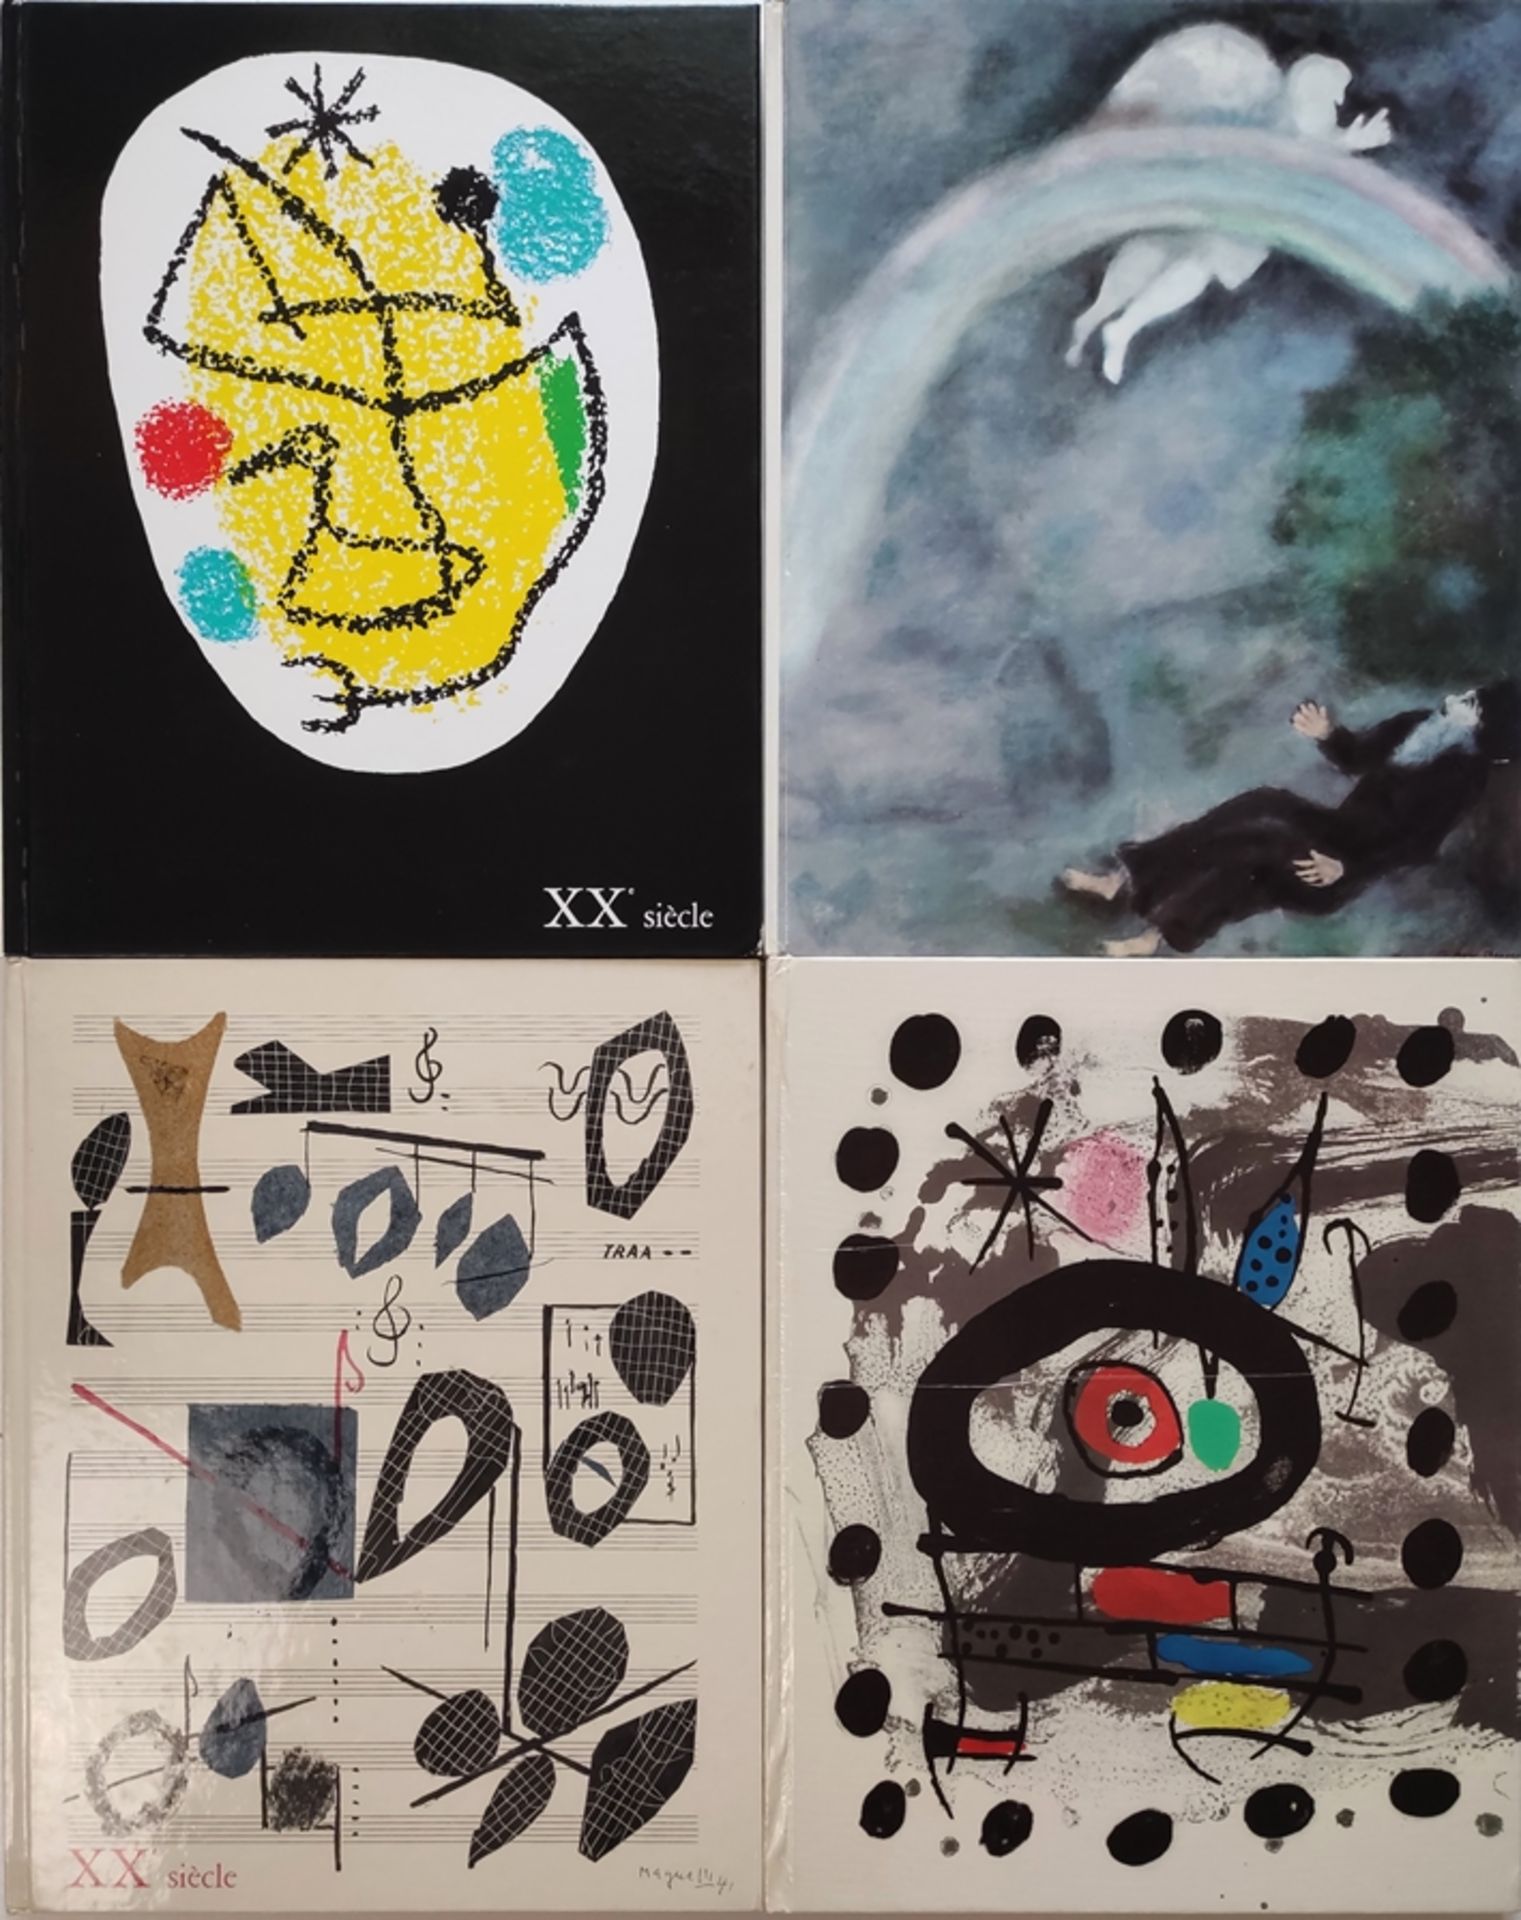 Four art volumes "XXe Siècle. Nouvelle série", in French, consisting of: volume 28, 1967, "Bilan de